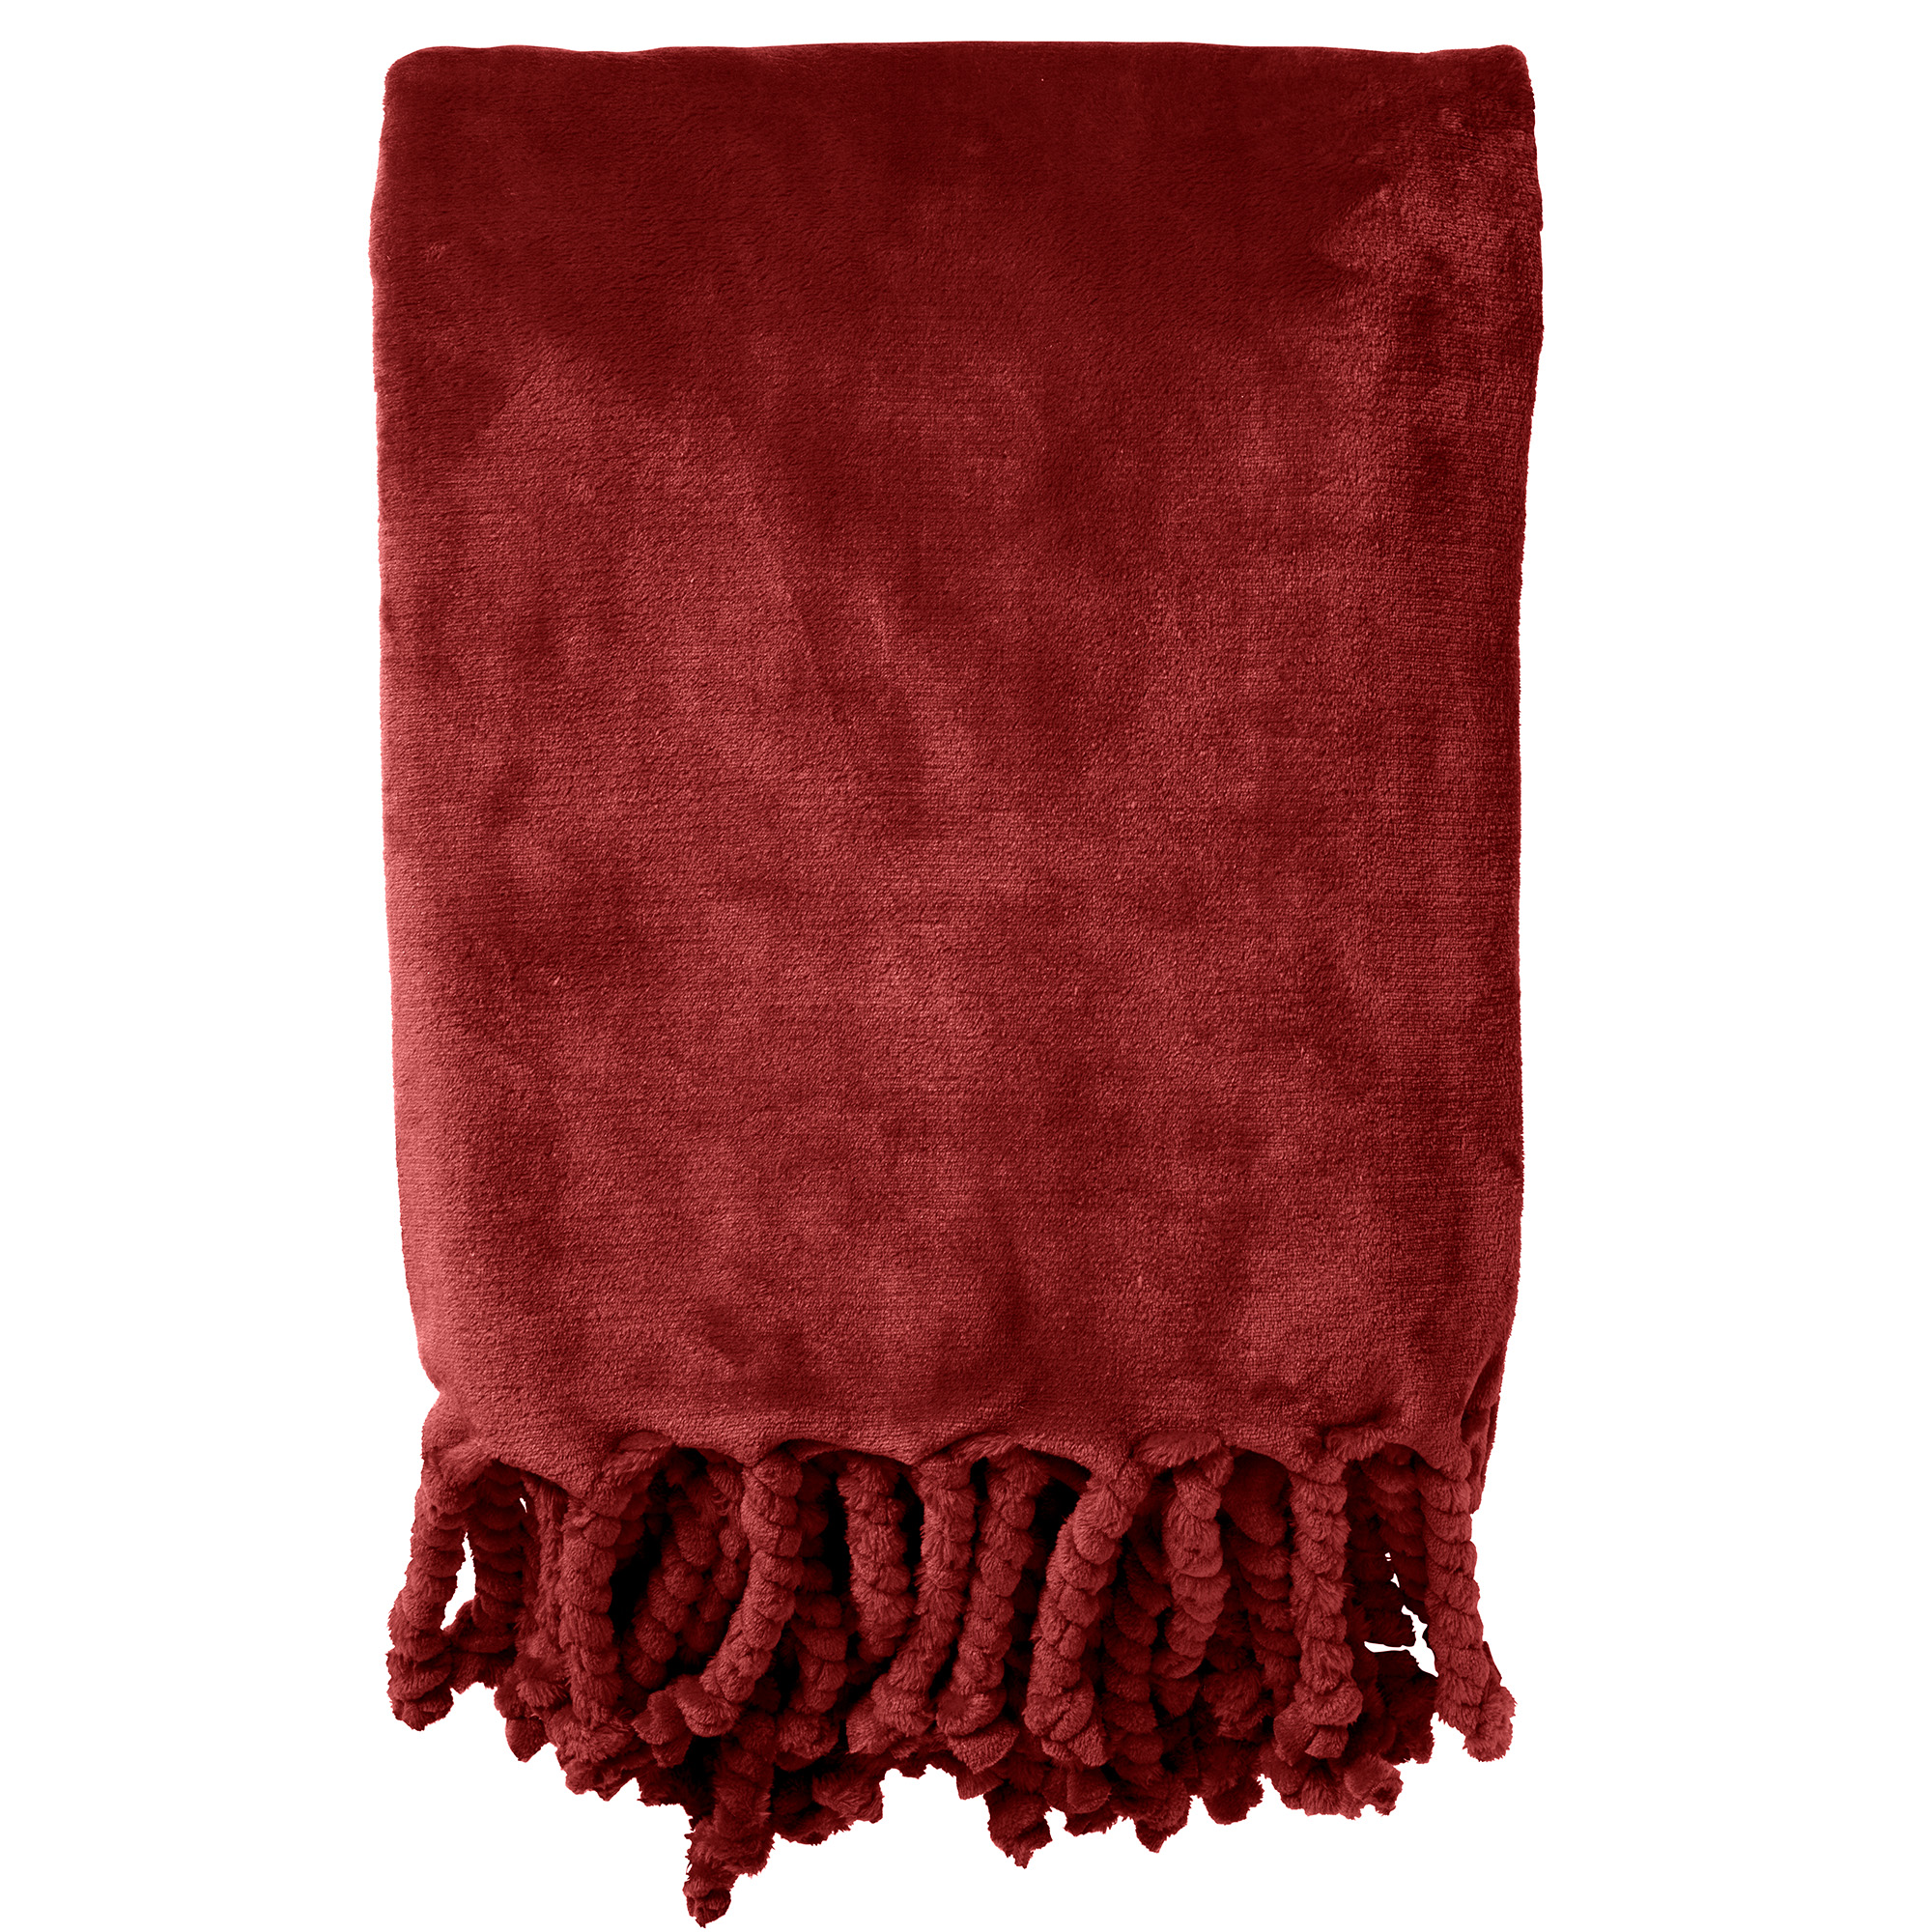 FLORIJN - Plaid 150 x200 cm - grote fleece plaid met flosjes - Merlot - bordeaux rood